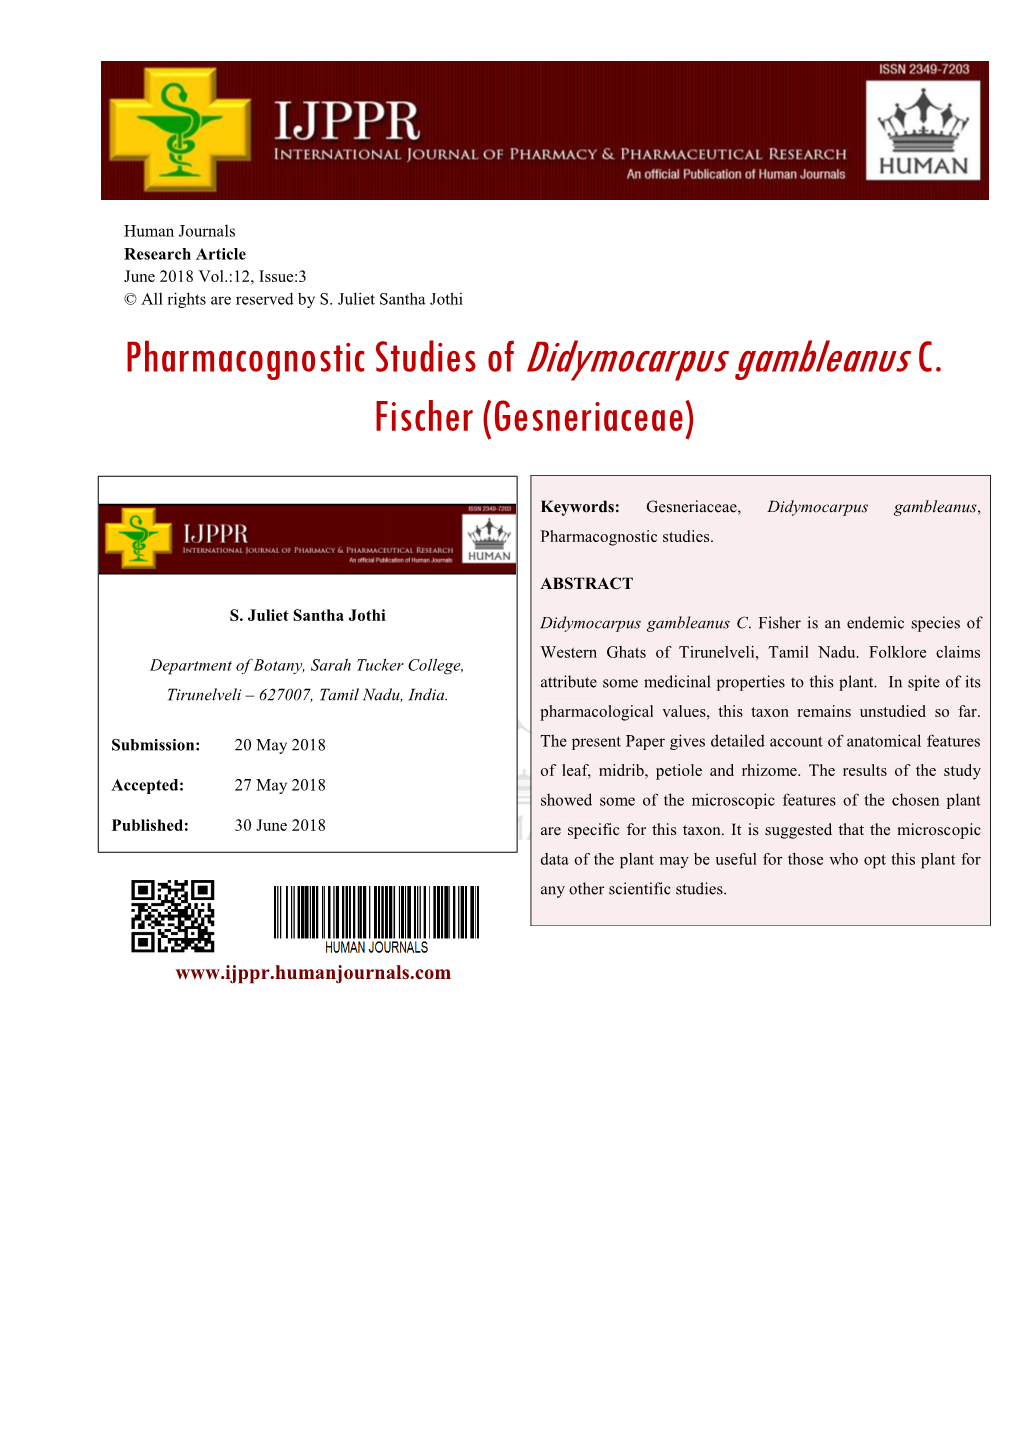 Pharmacognostic Studies of Didymocarpus Gambleanusc. Fischer